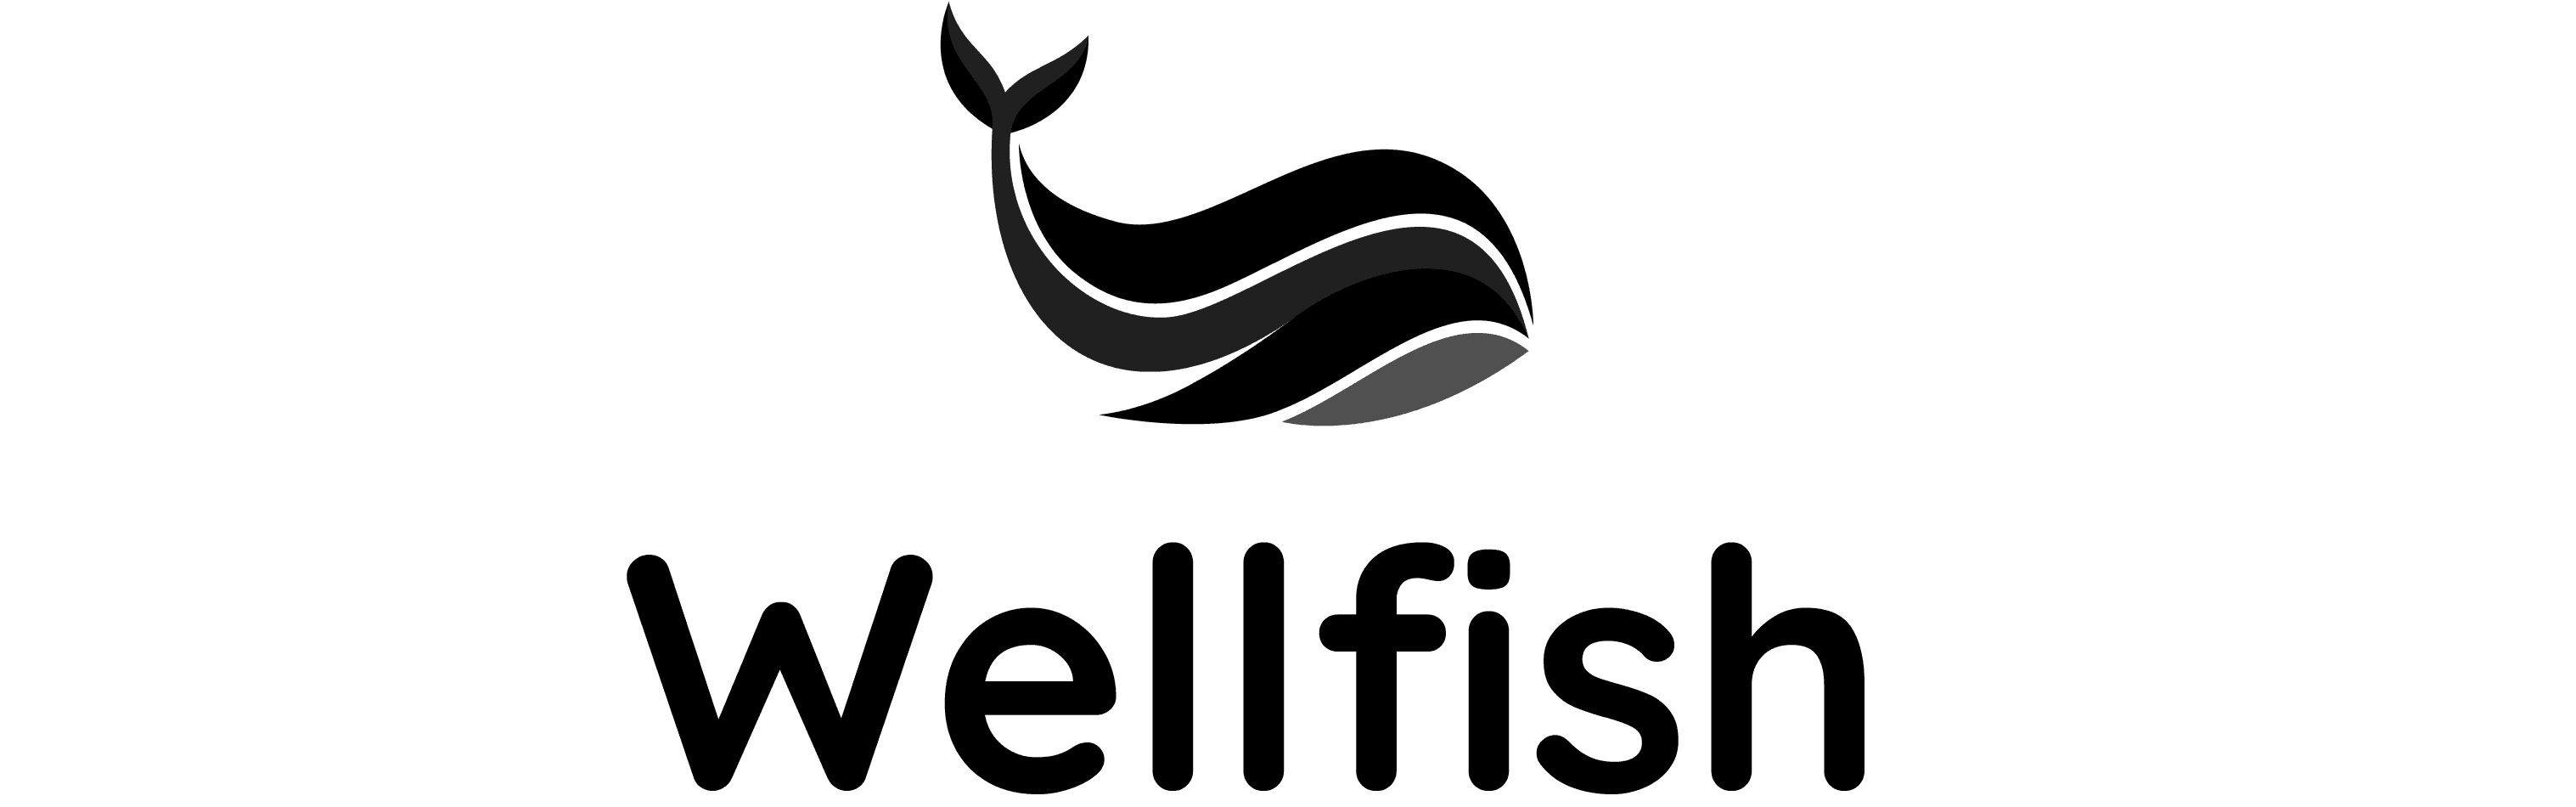 Wellfish logo